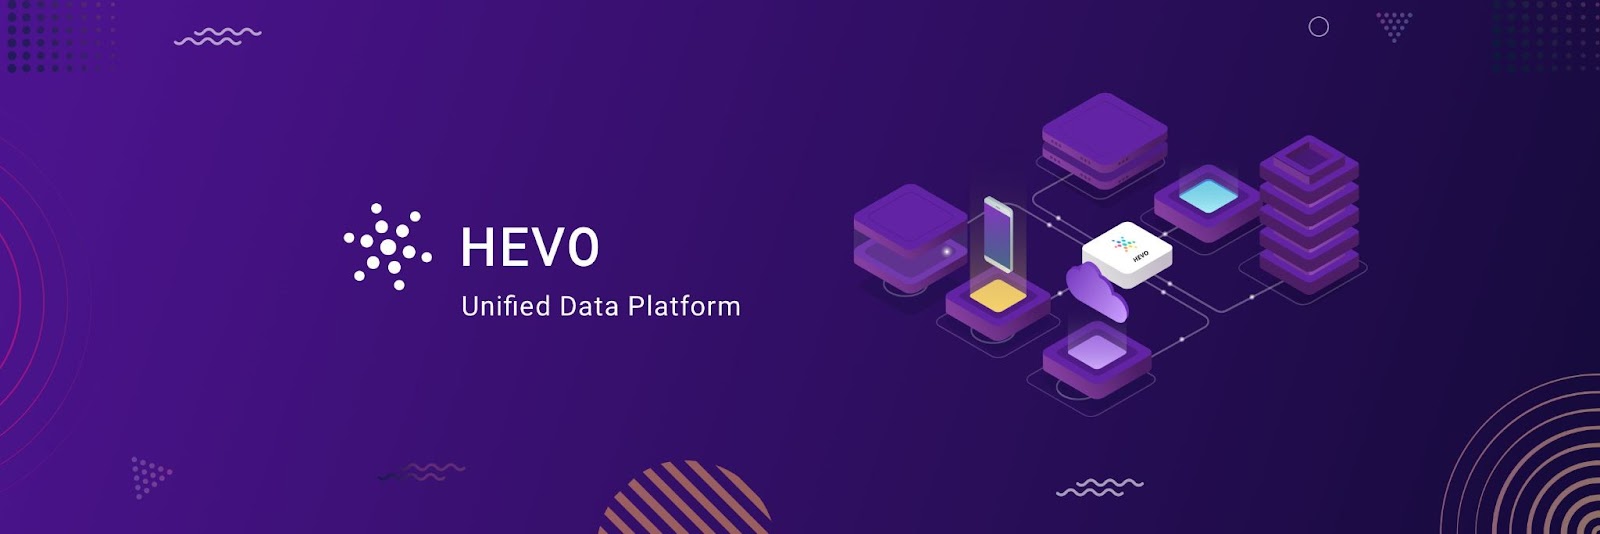 WooCommerce SQL Server: Hevo Logo